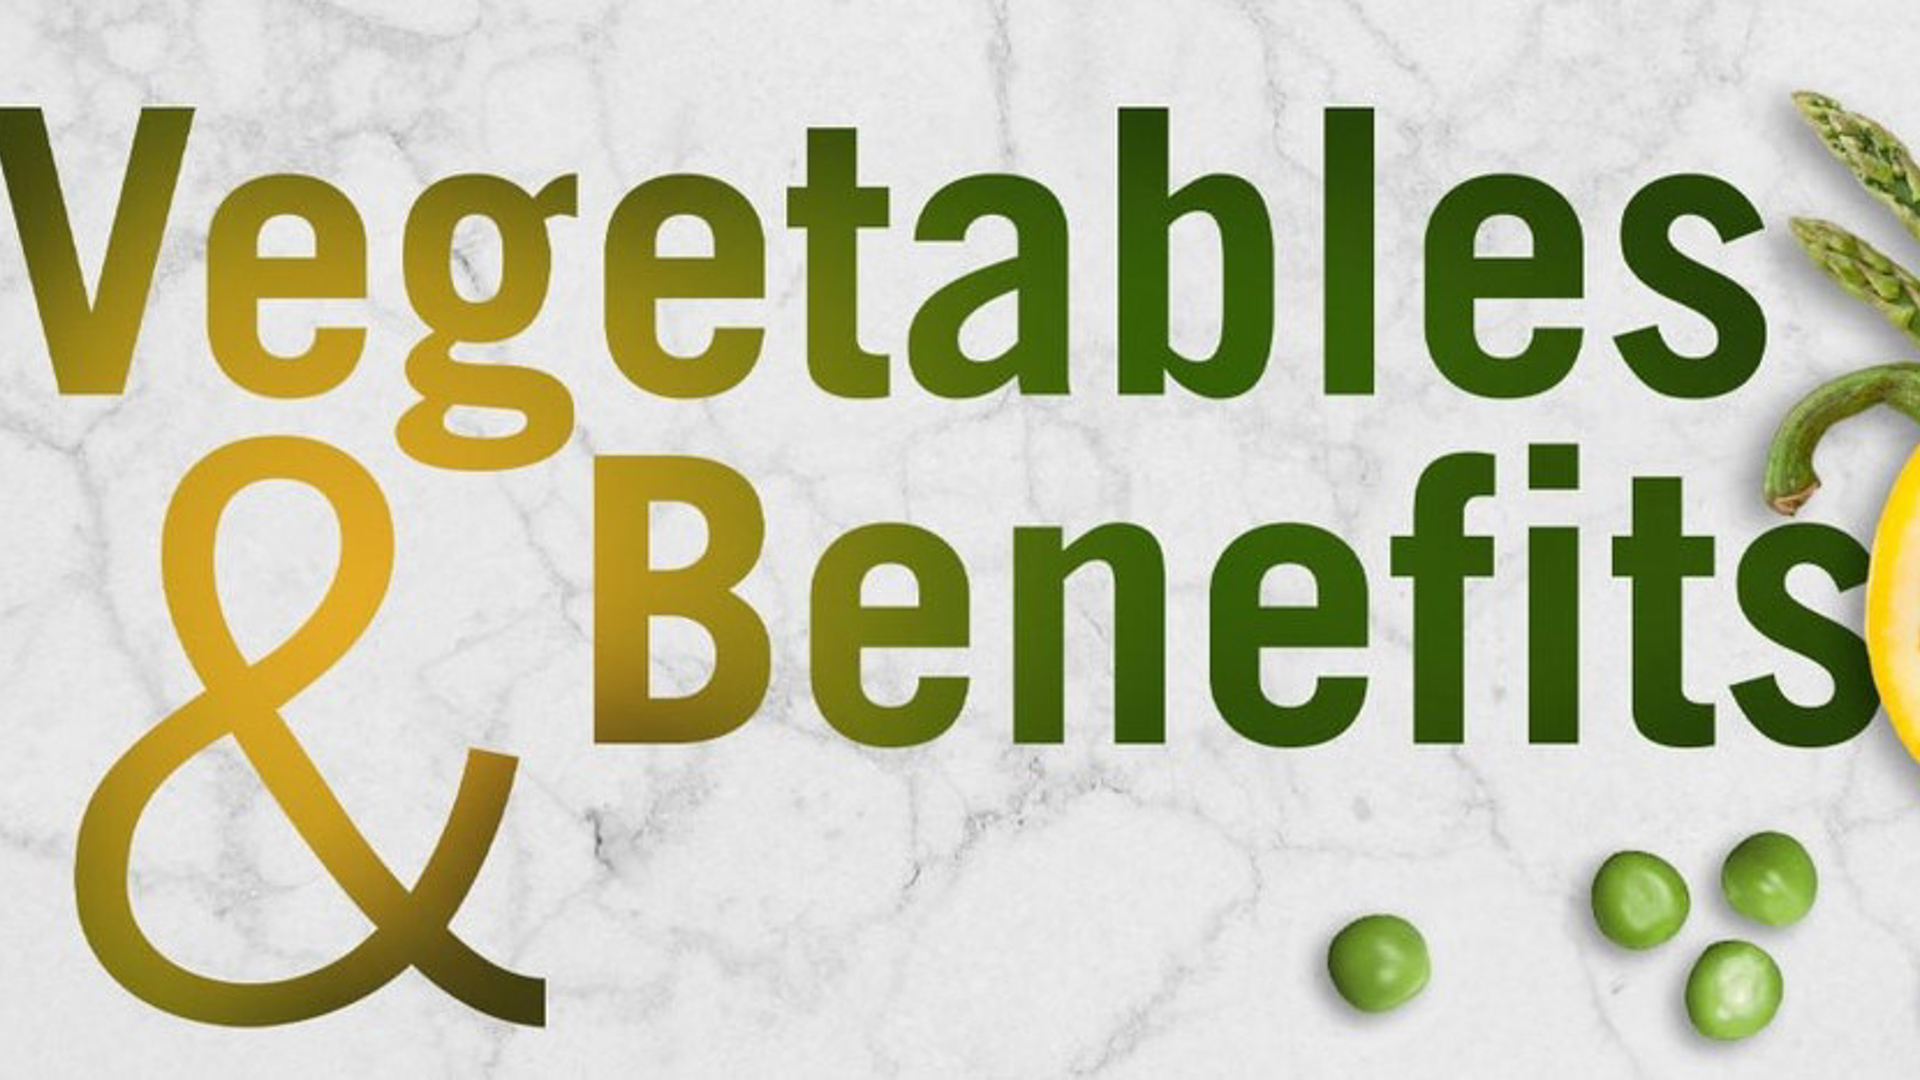 Vegetables & Benefits